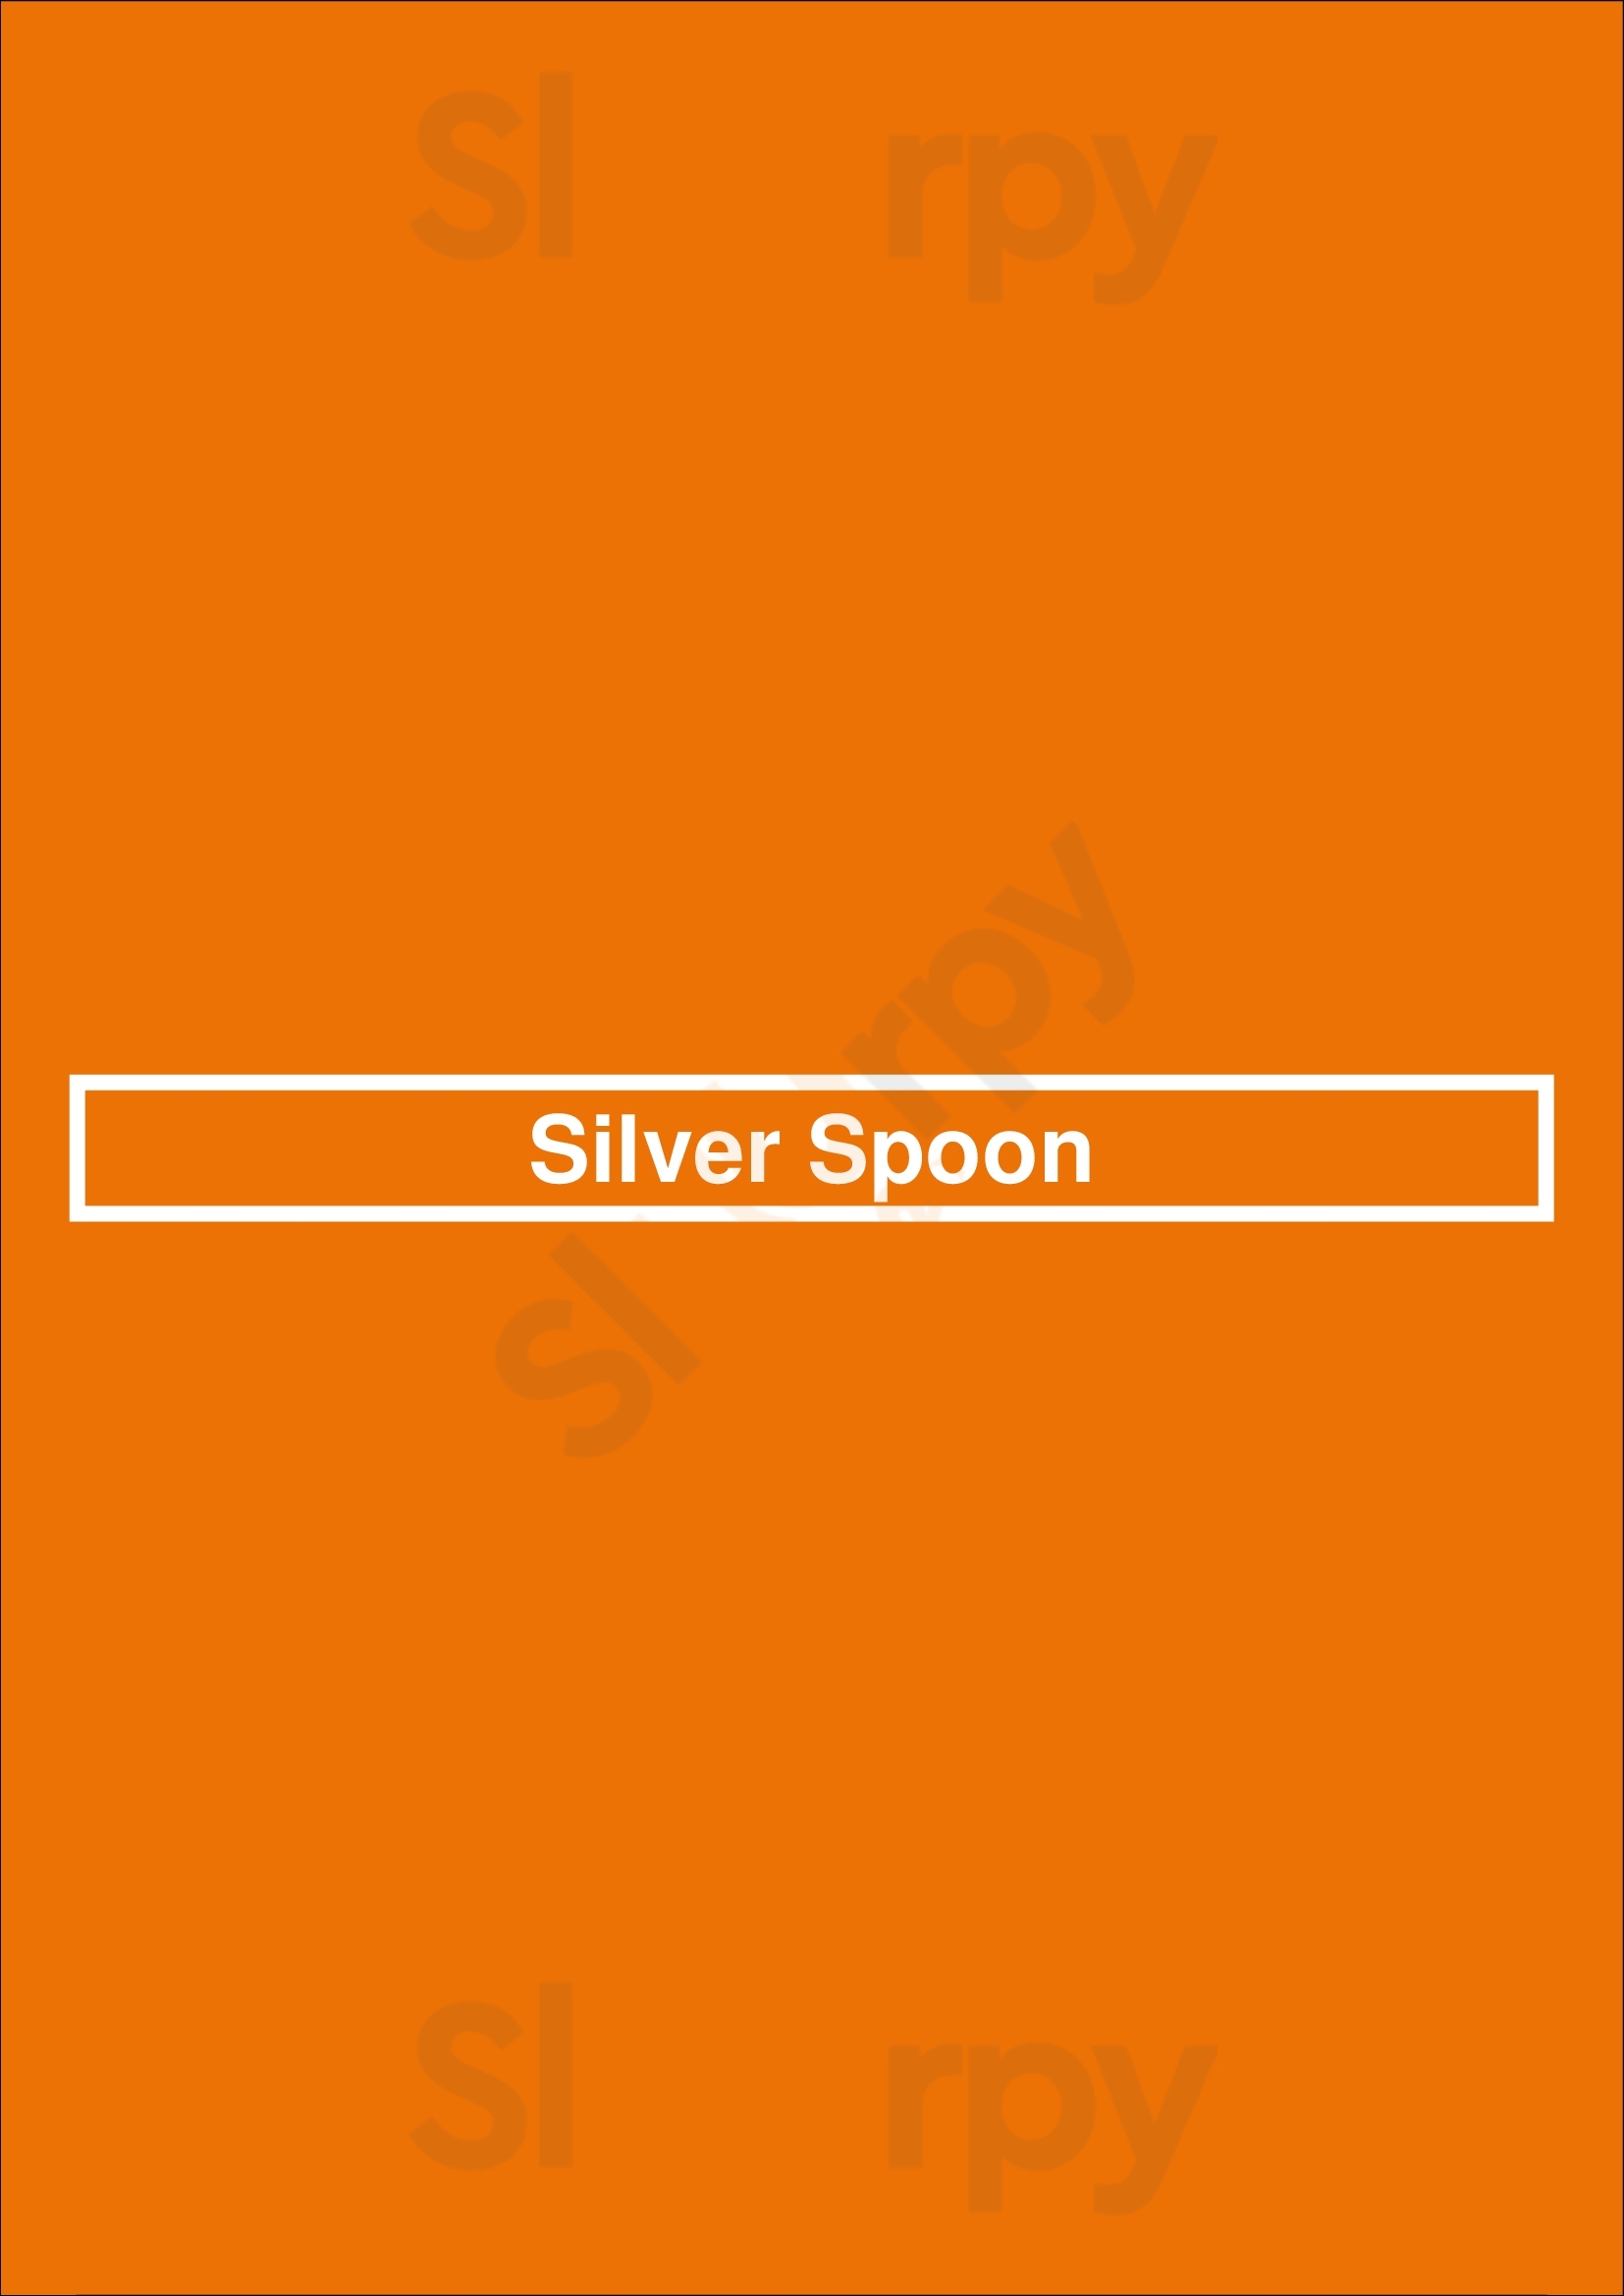 Silver Spoon Mississauga Menu - 1